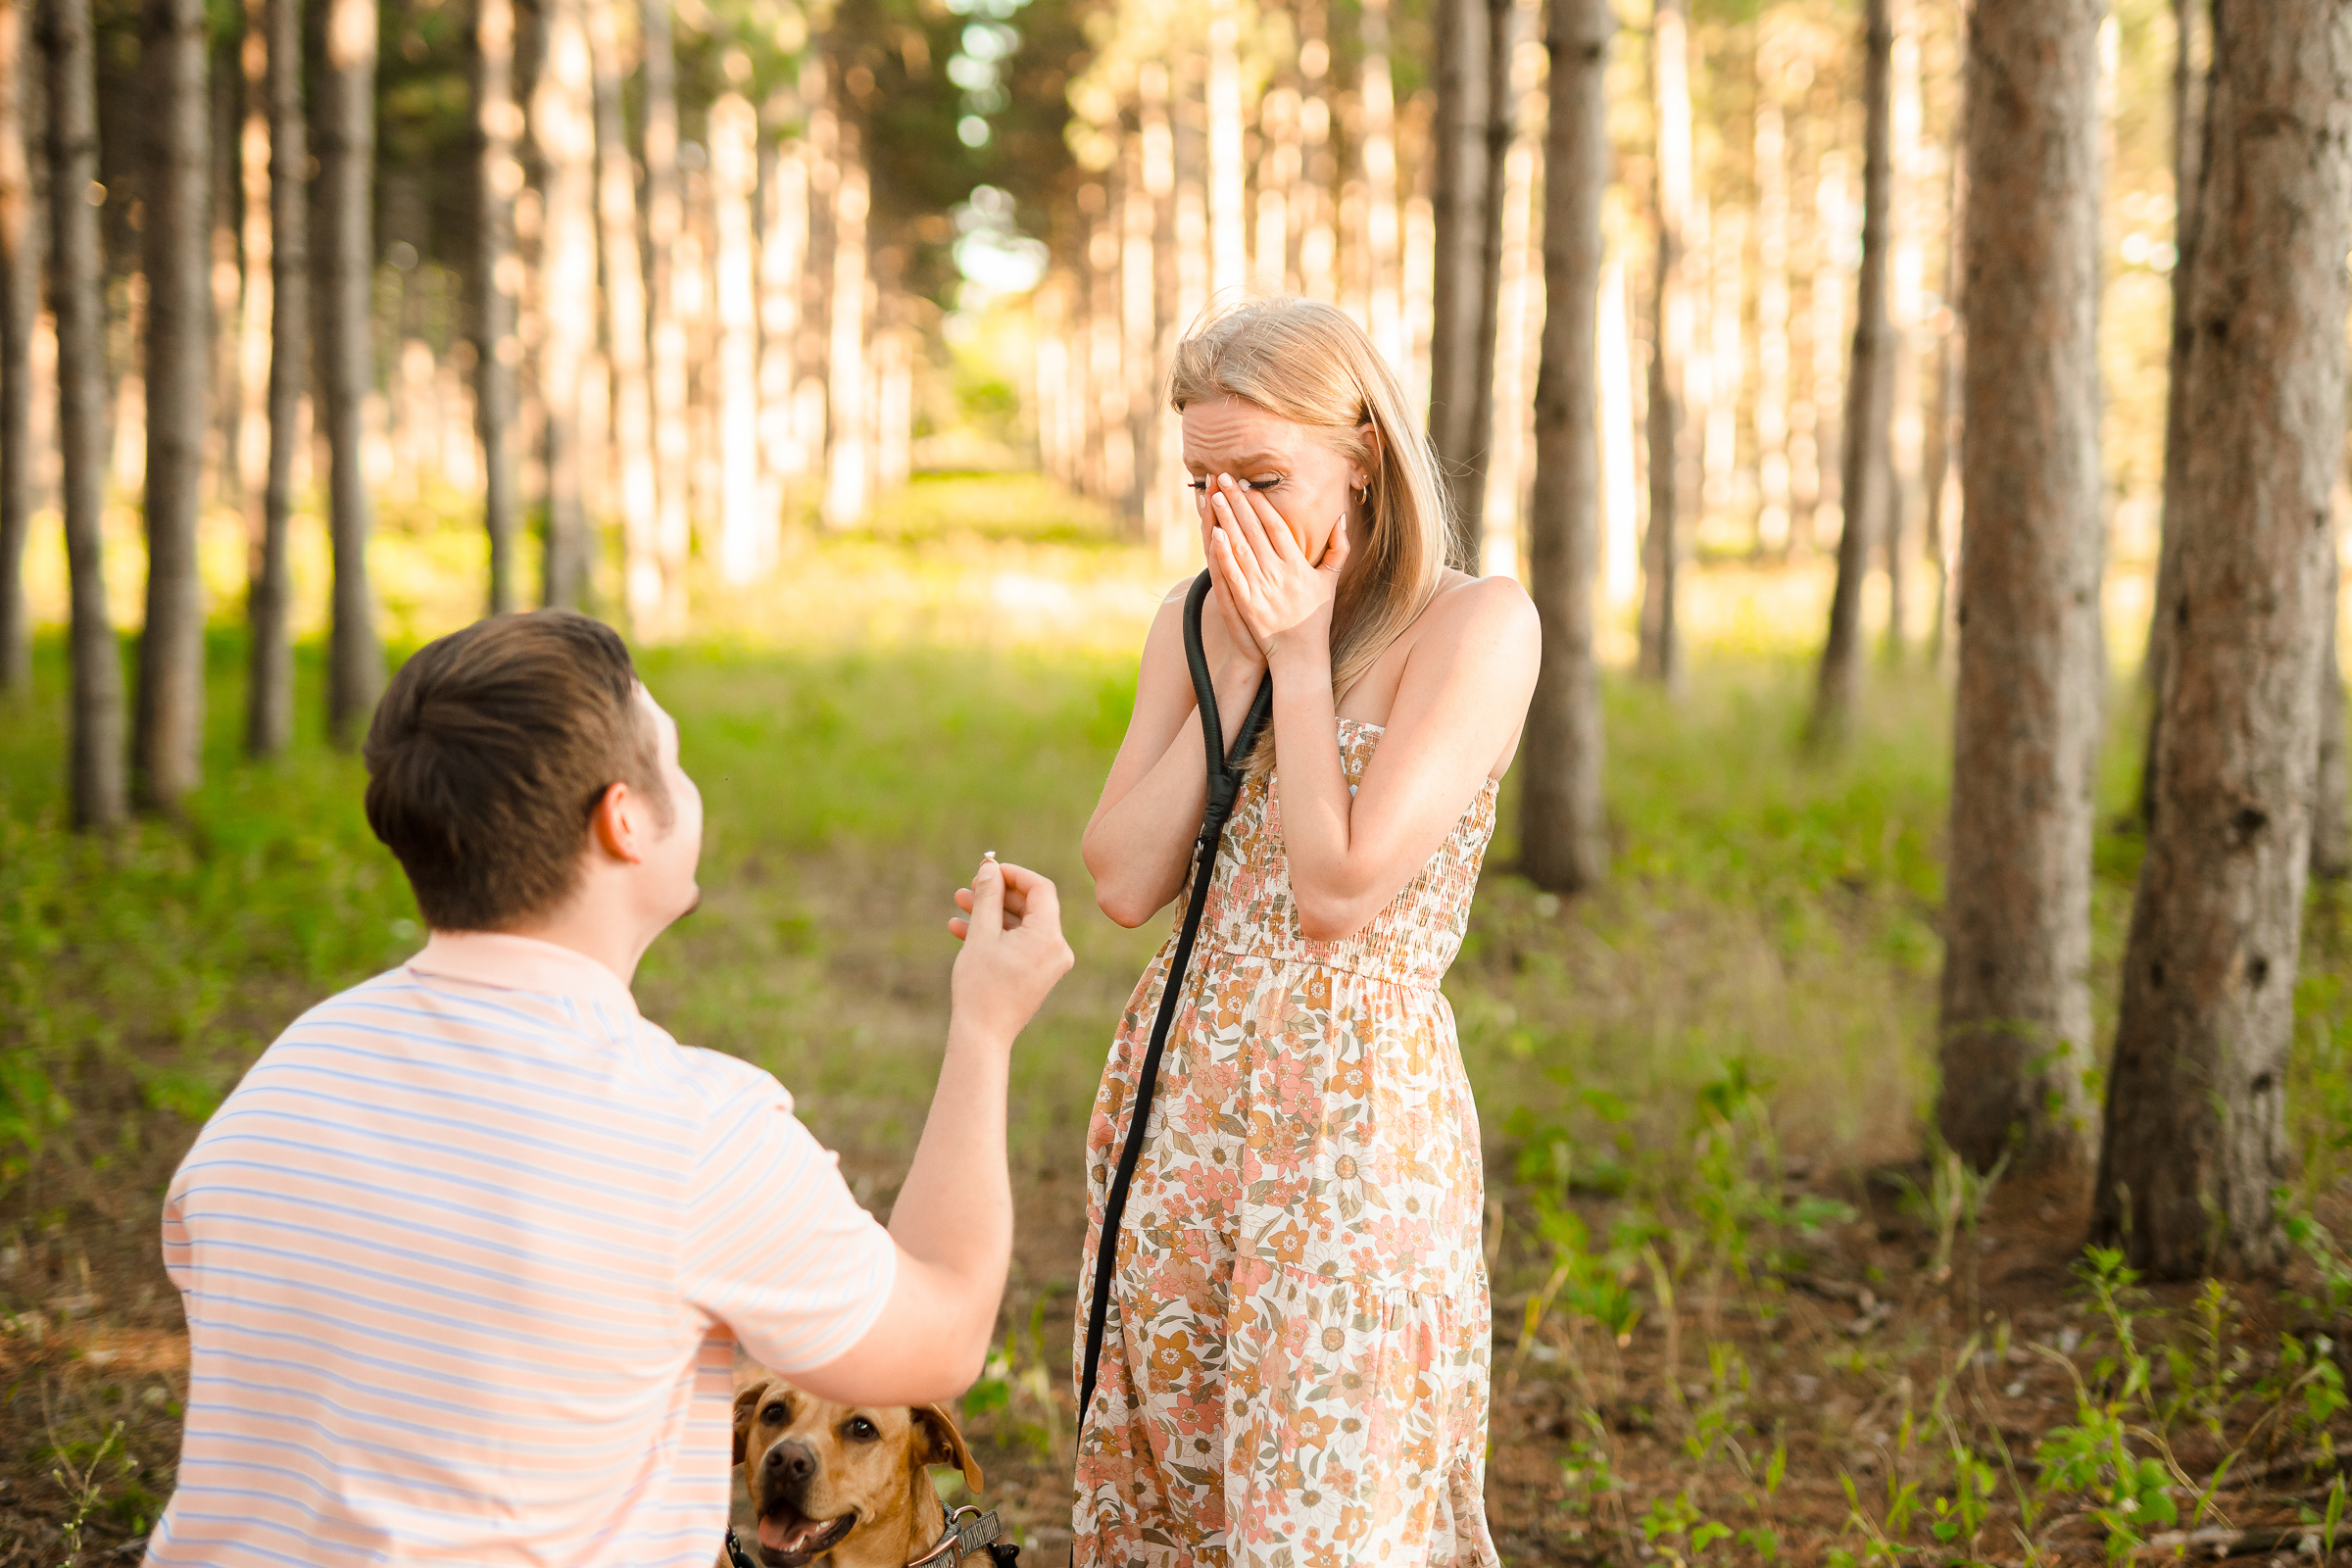 Minnesota Proposal / Engagement Photographer - Studio Twelve:52 - She said yes! - Pup photo/photography session turned surprise wedding proposal.